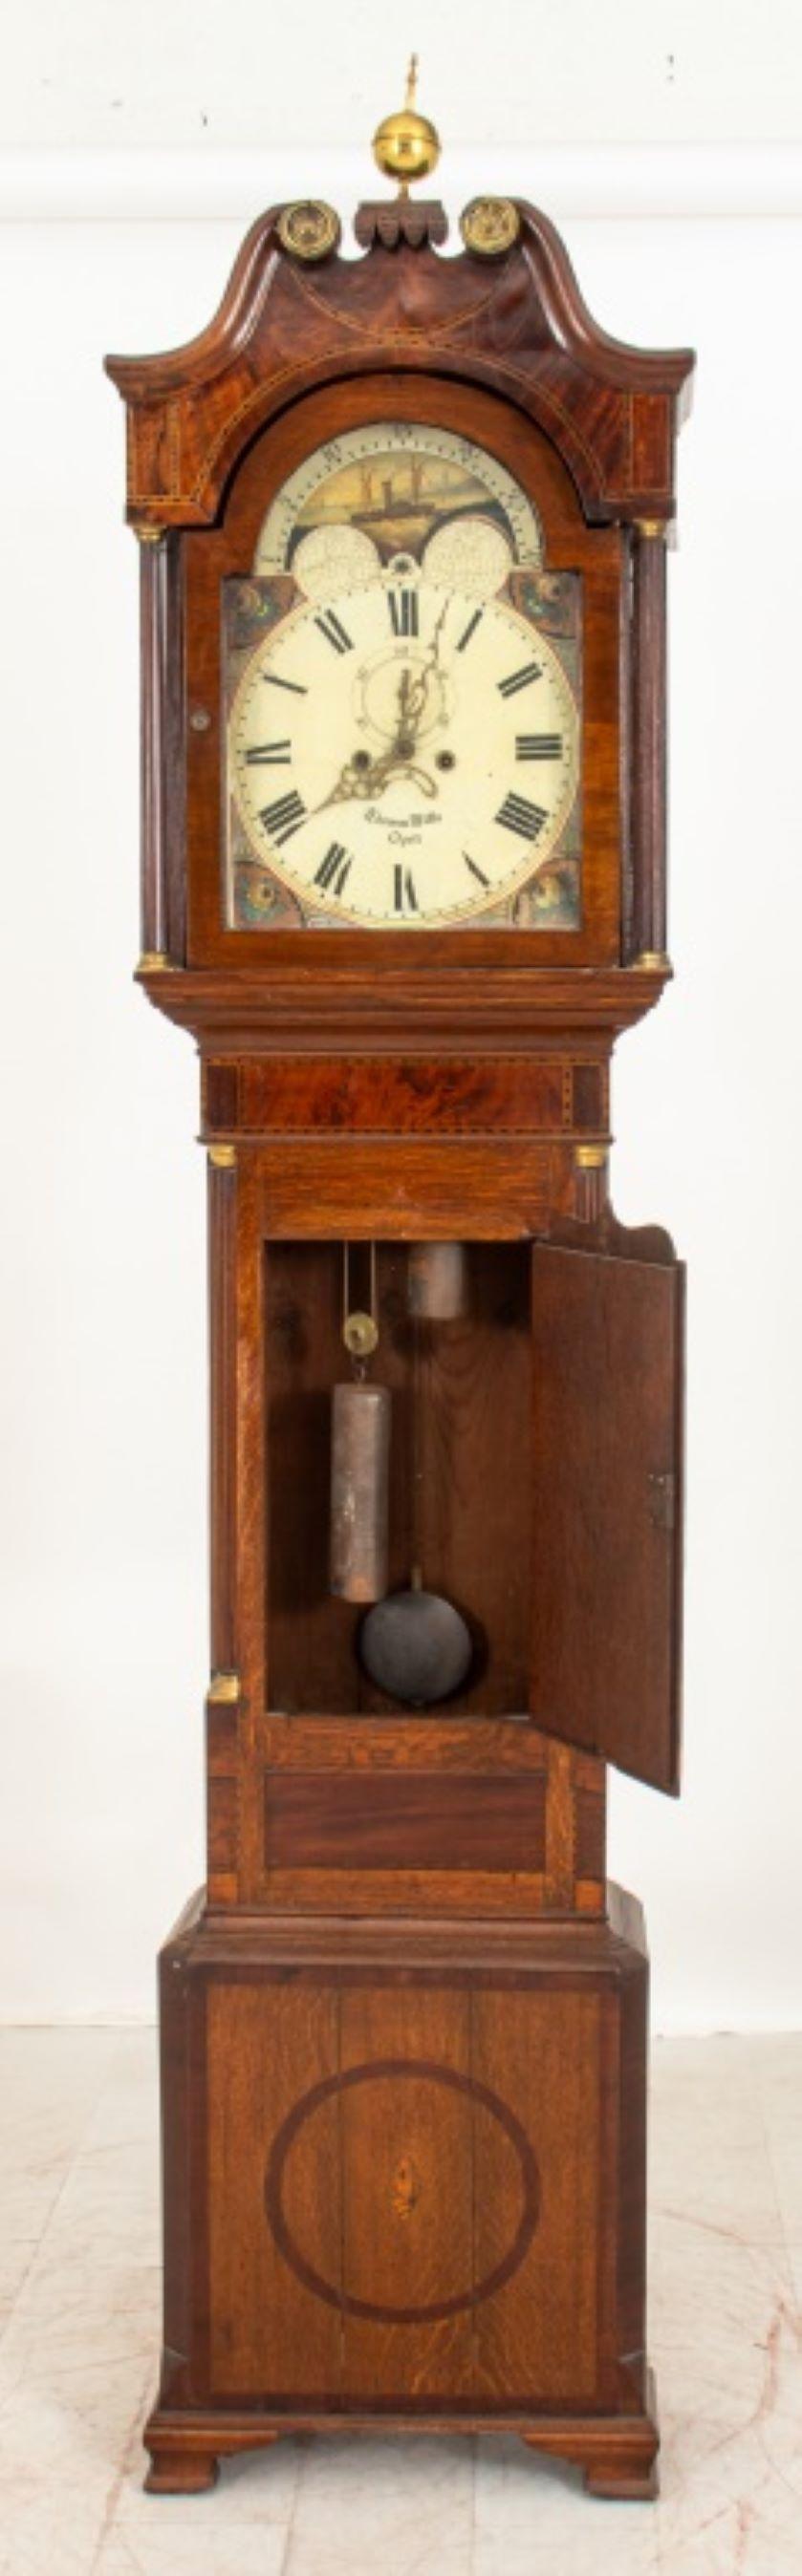 Thomas Wills George III Longcase Clock, 19th Century For Sale 5